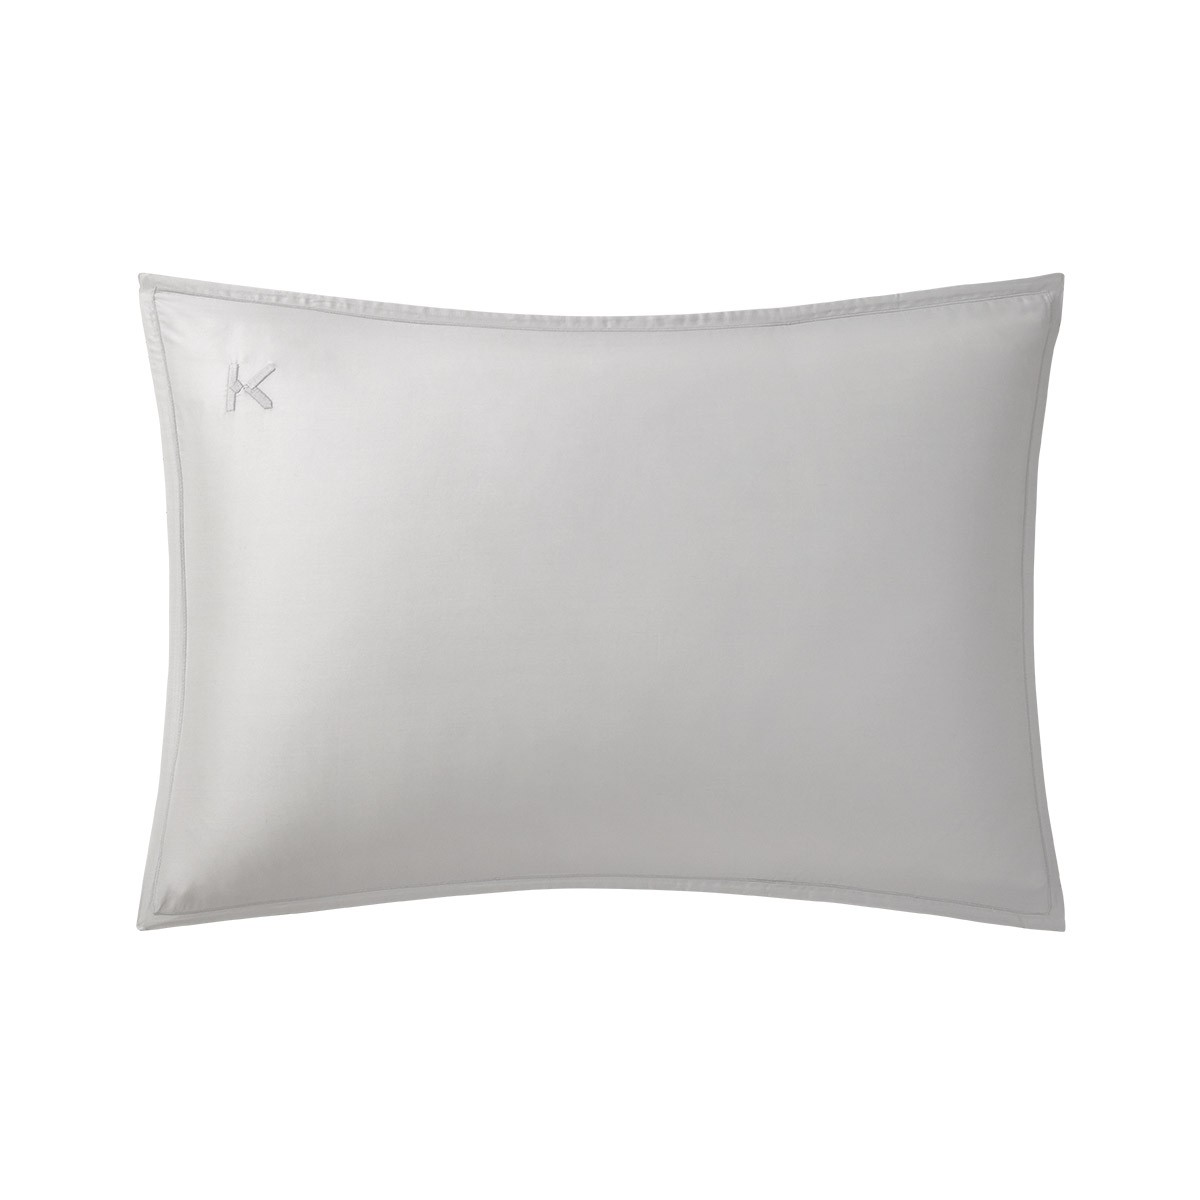 Pillowcase KZ Iconic 